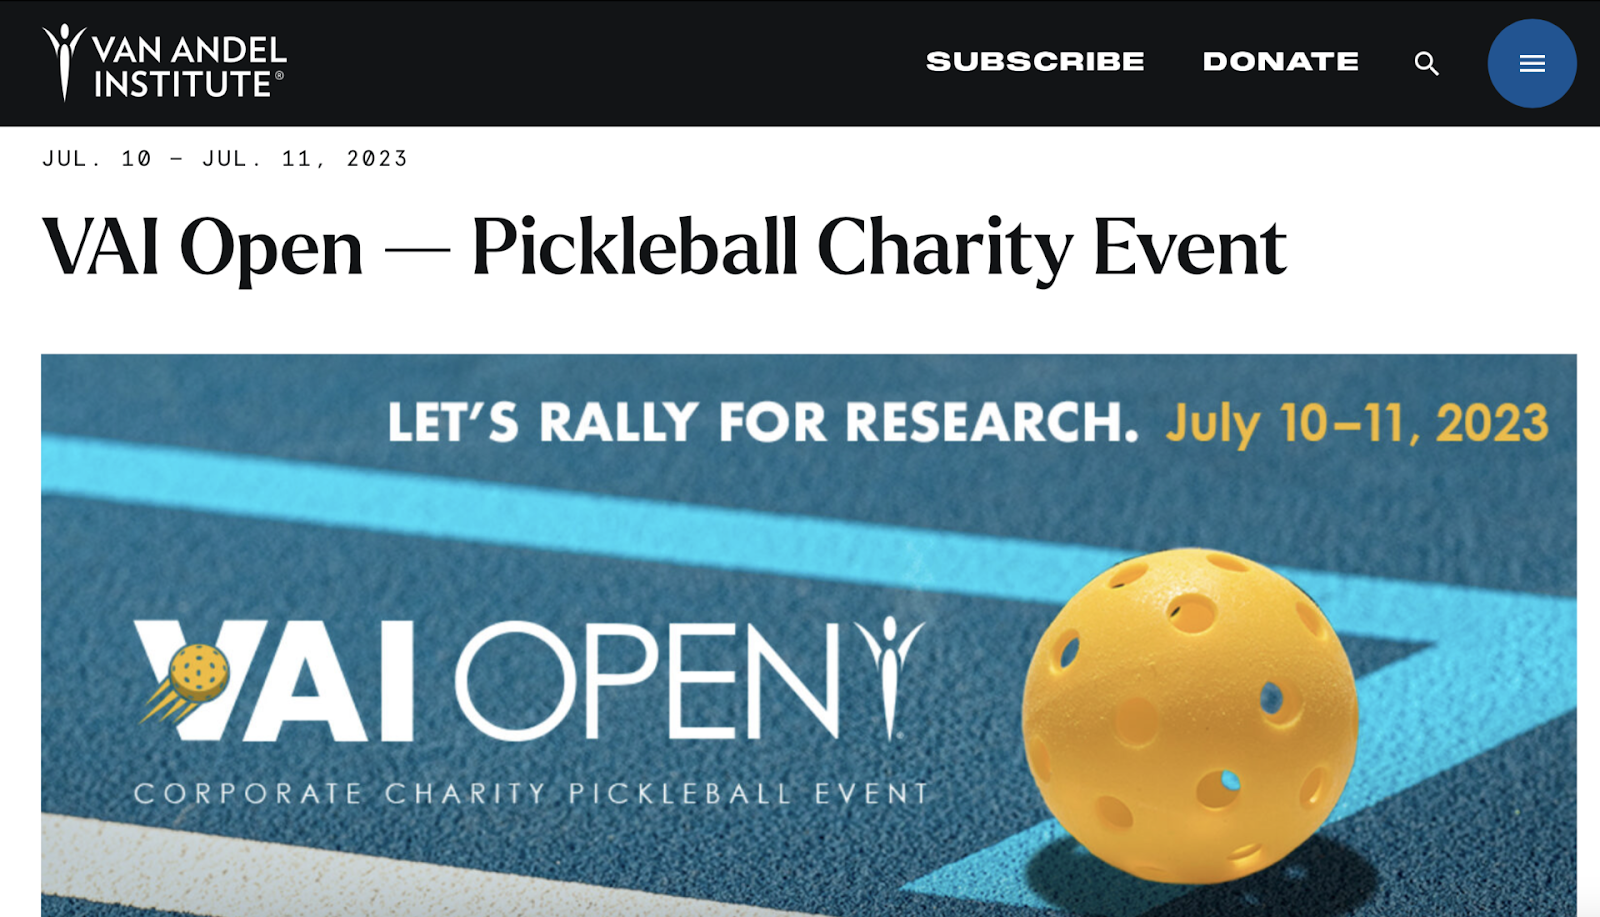 Van Andel Institute pickleball charity event fundraising ad